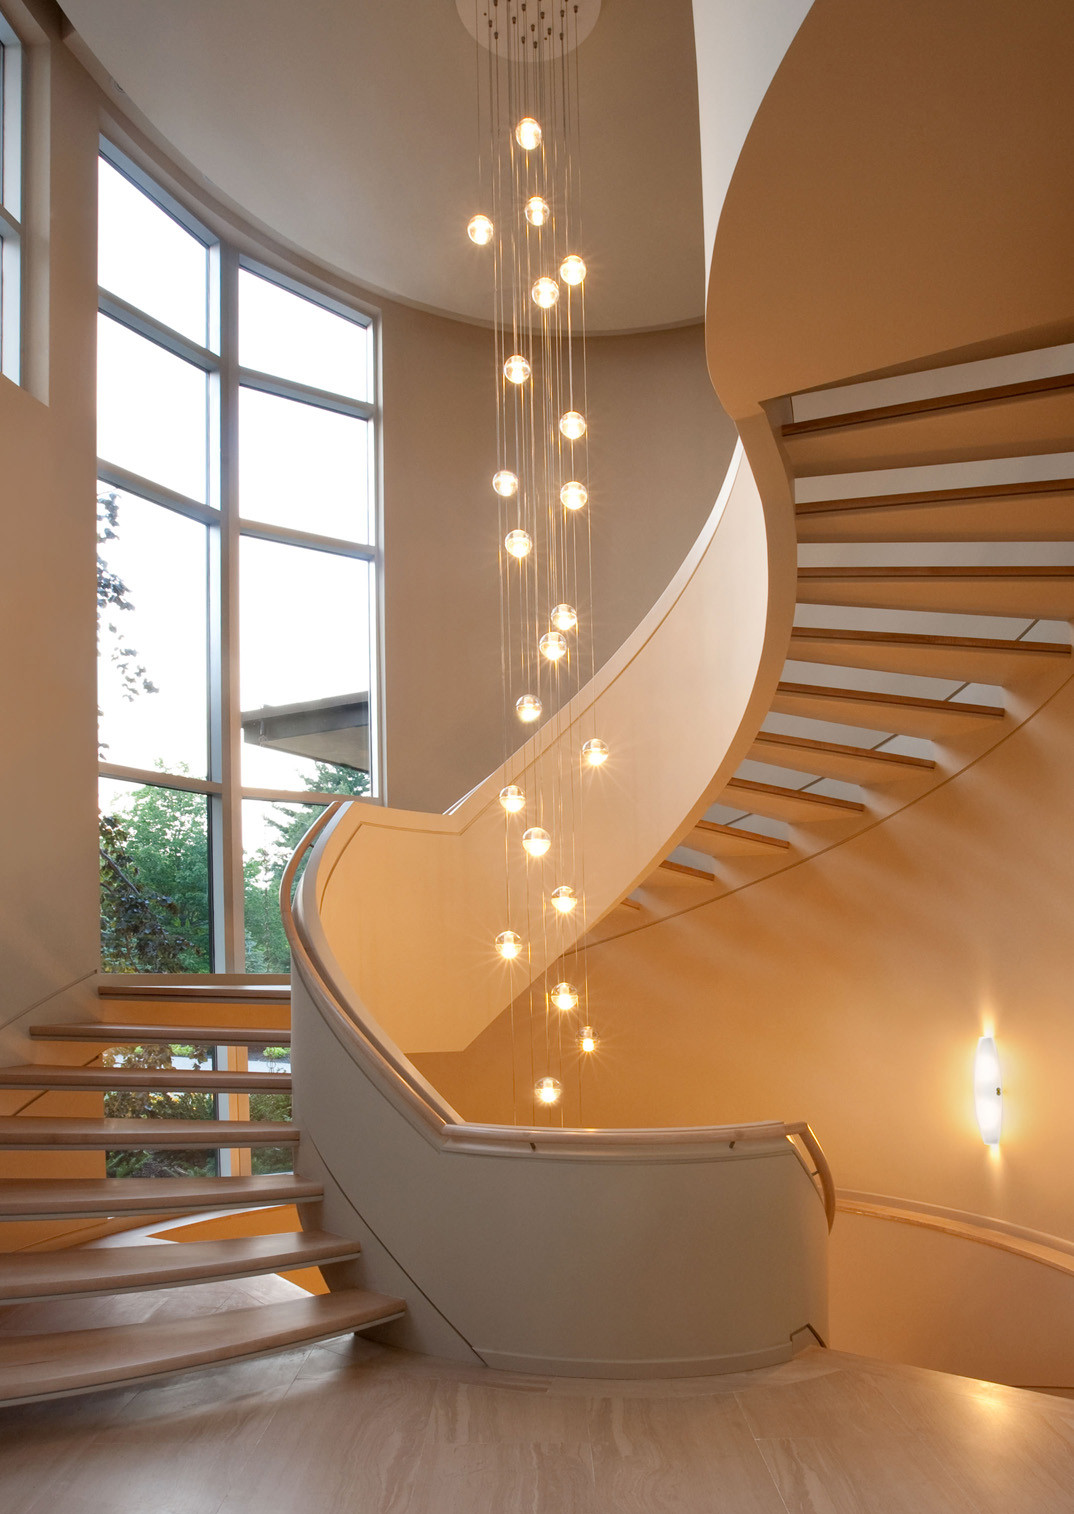 Staircase Pendant Light Fixture - Photos & Ideas | Houzz